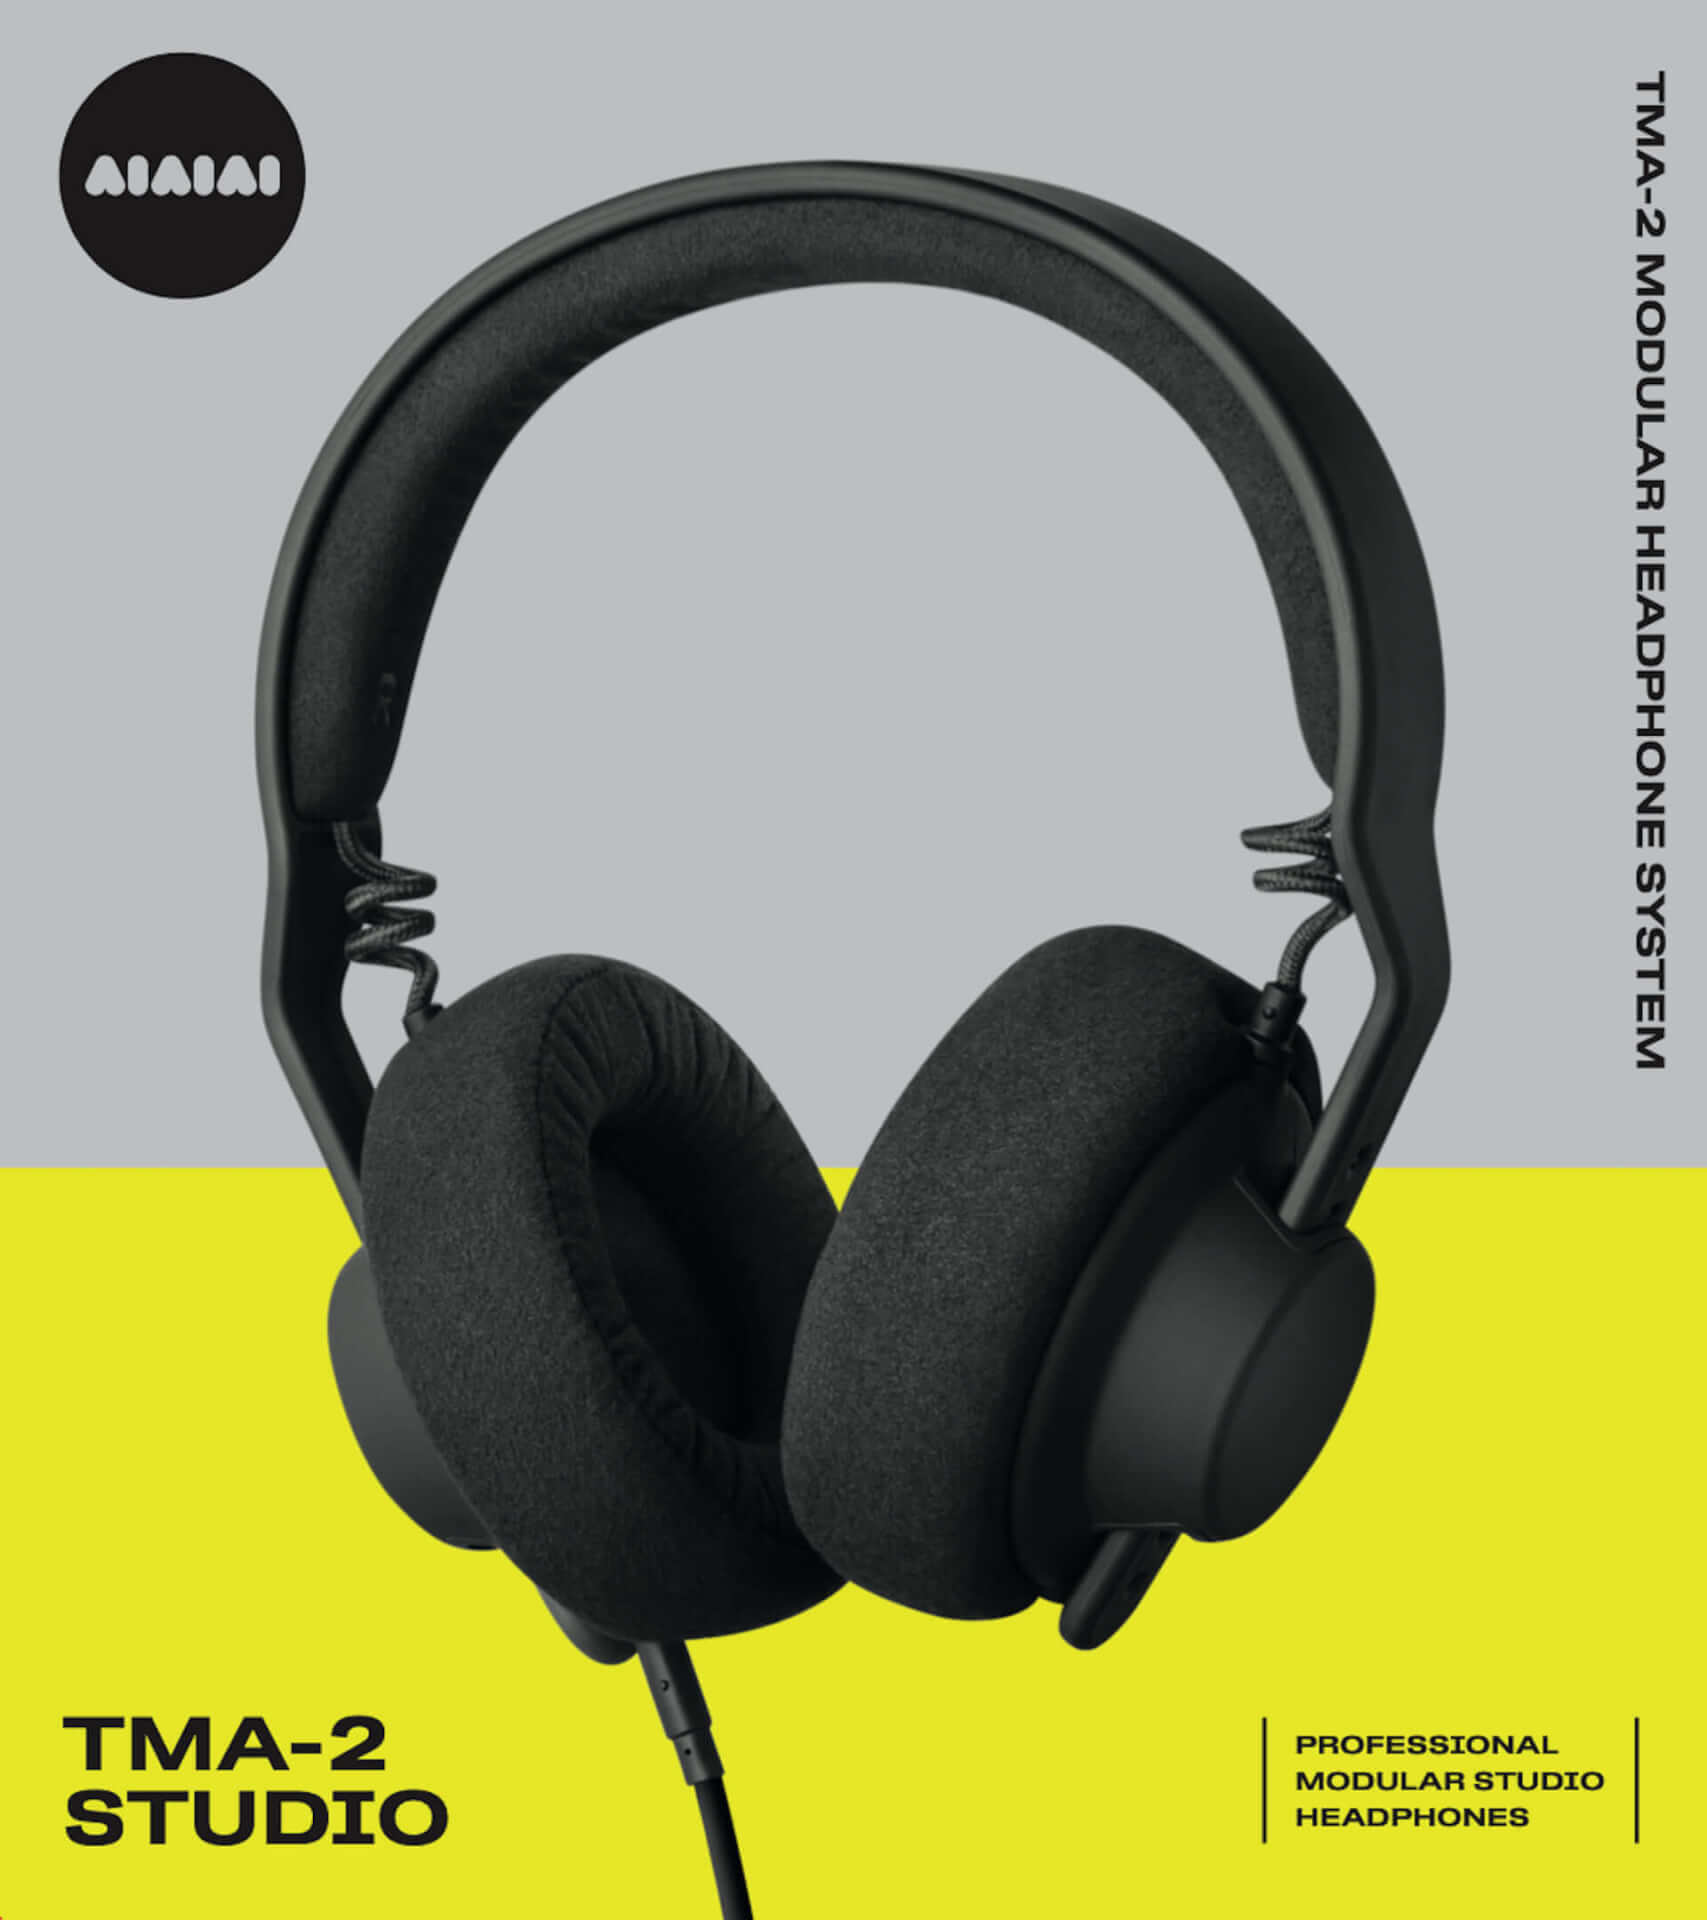 AIAIAIの魅力に迫る！新作スタジオ向けヘッドフォン『TMA-2 Studio』と『TMA-2 Studio XE』を解剖 music210903_aiaiai-016